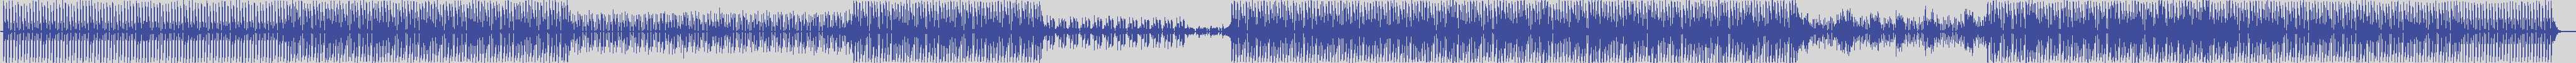 atomic_recordings [AR008] Andrea Love - Mr. Fairytale [Jamie Lewis Organ Dub] audio wave form